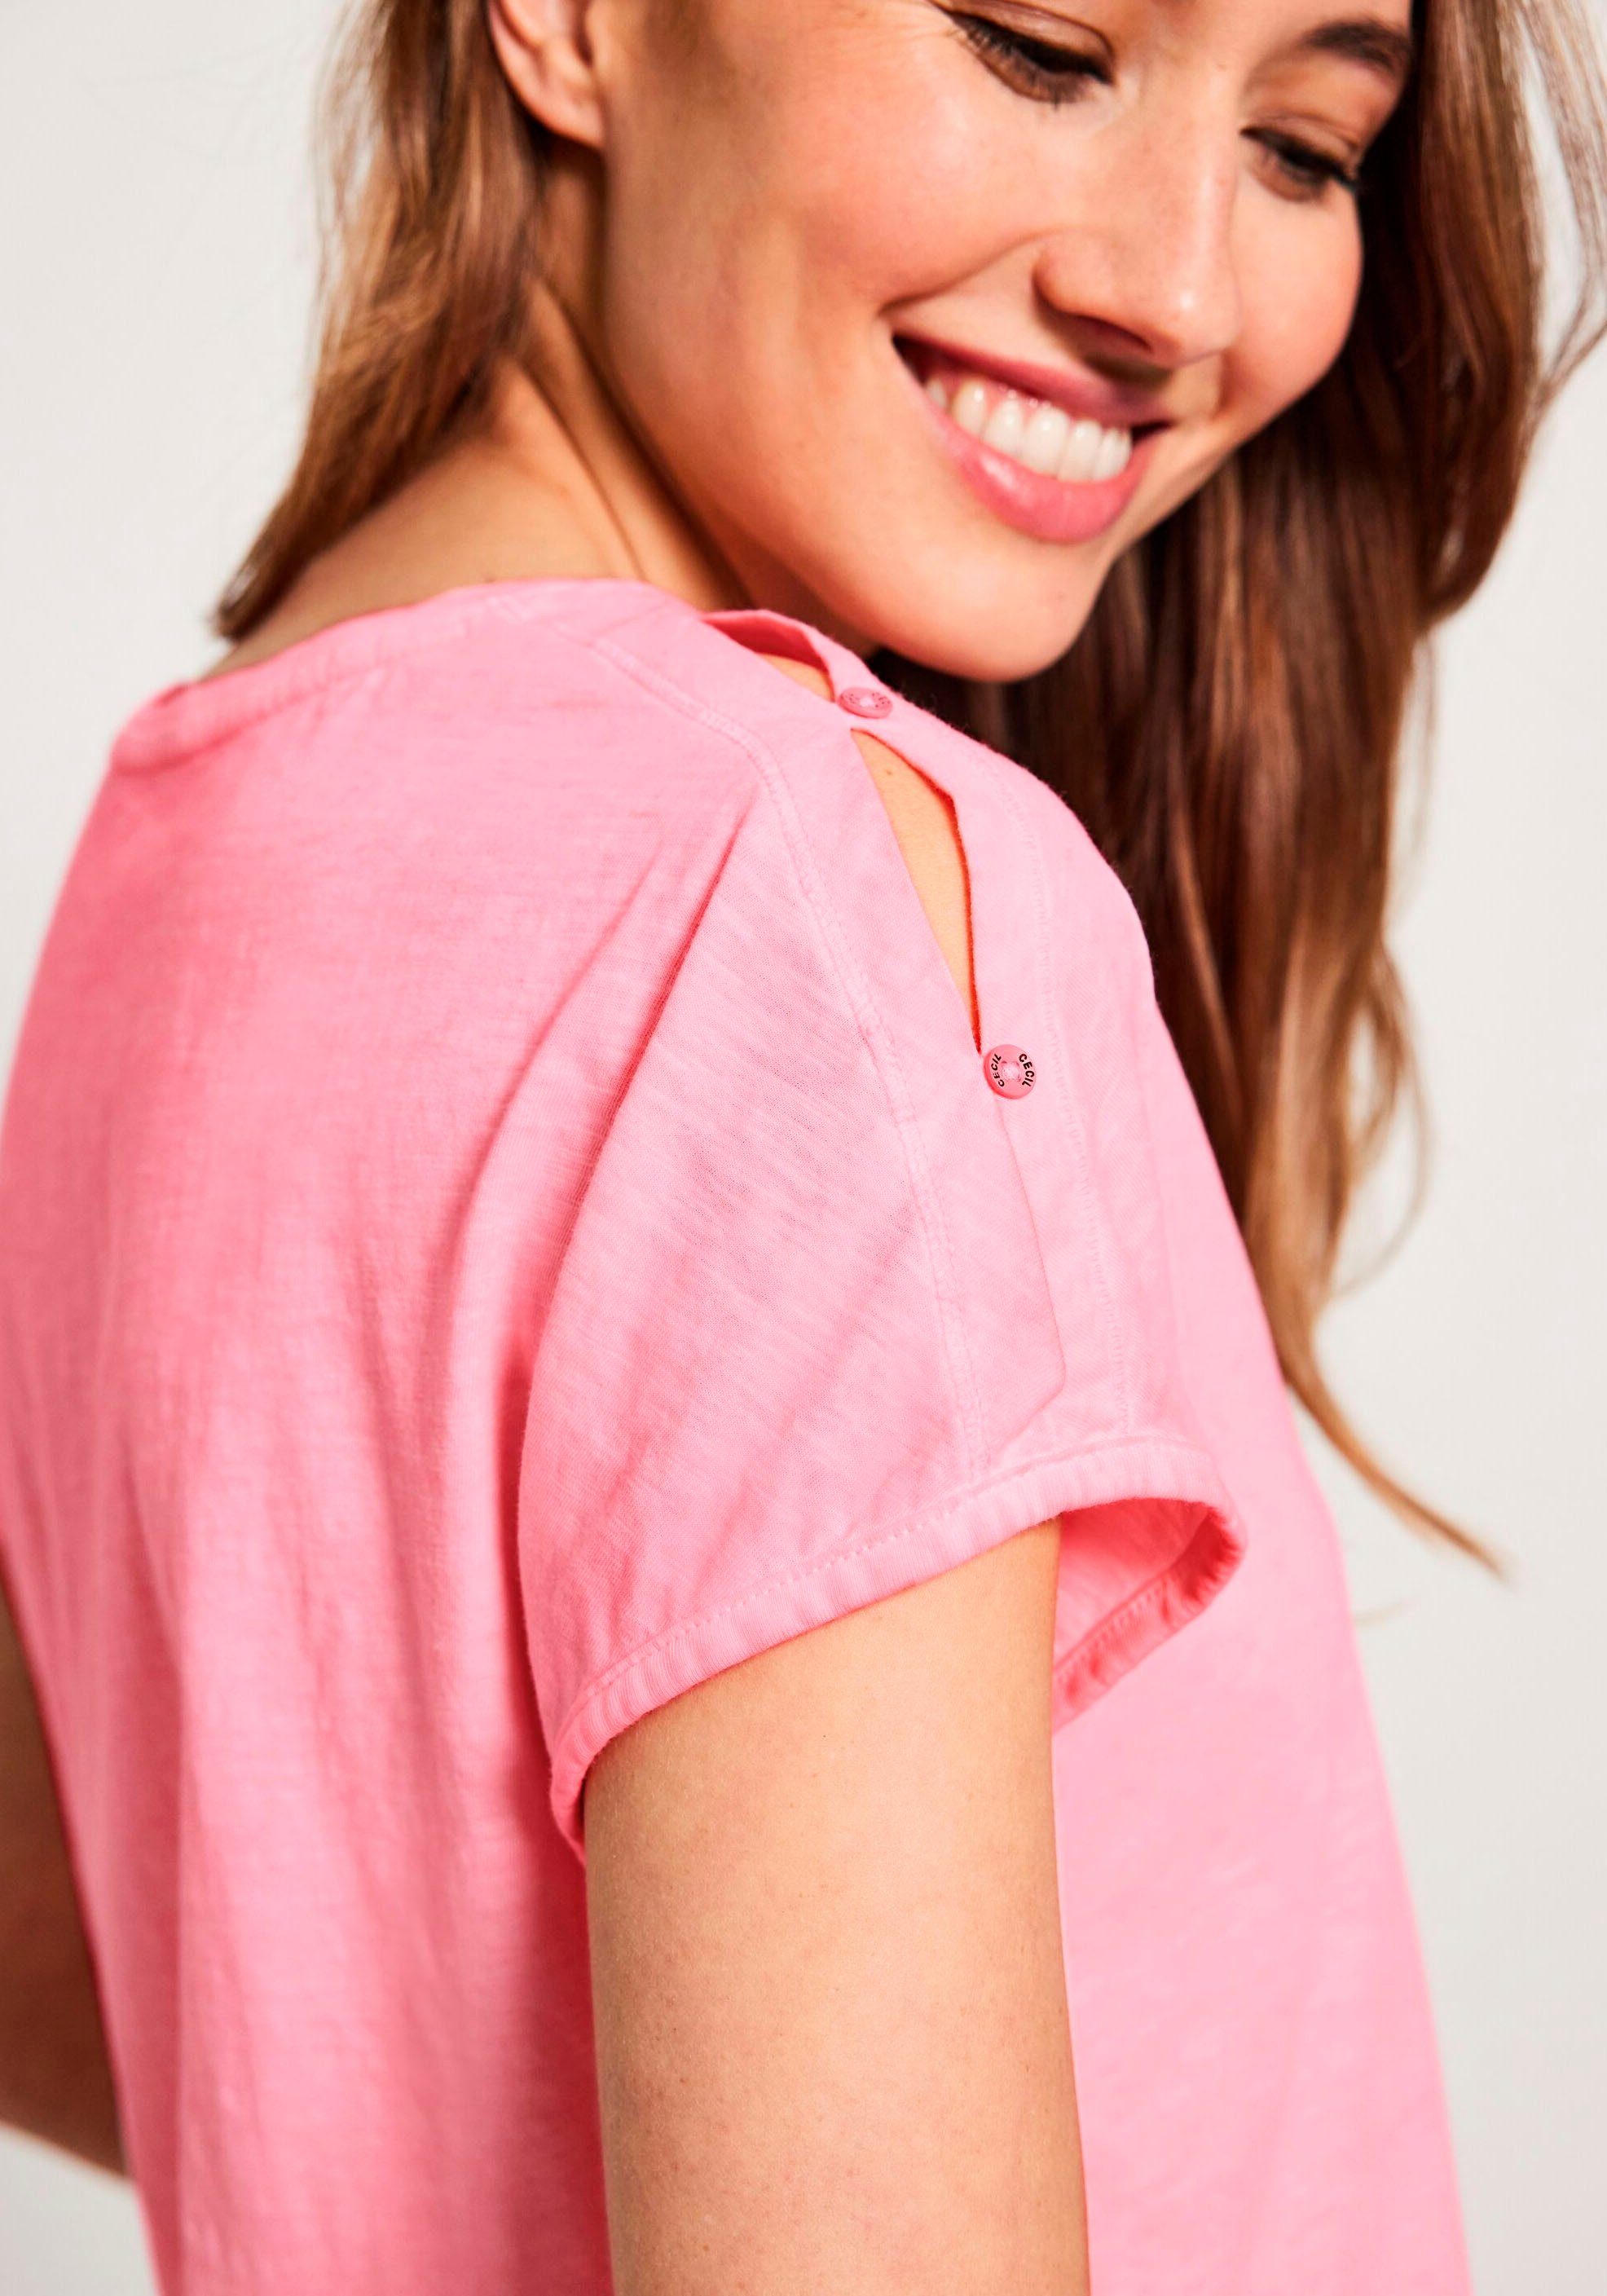 T-Shirt den pink Schultern Cecil an Cut-Outs mit